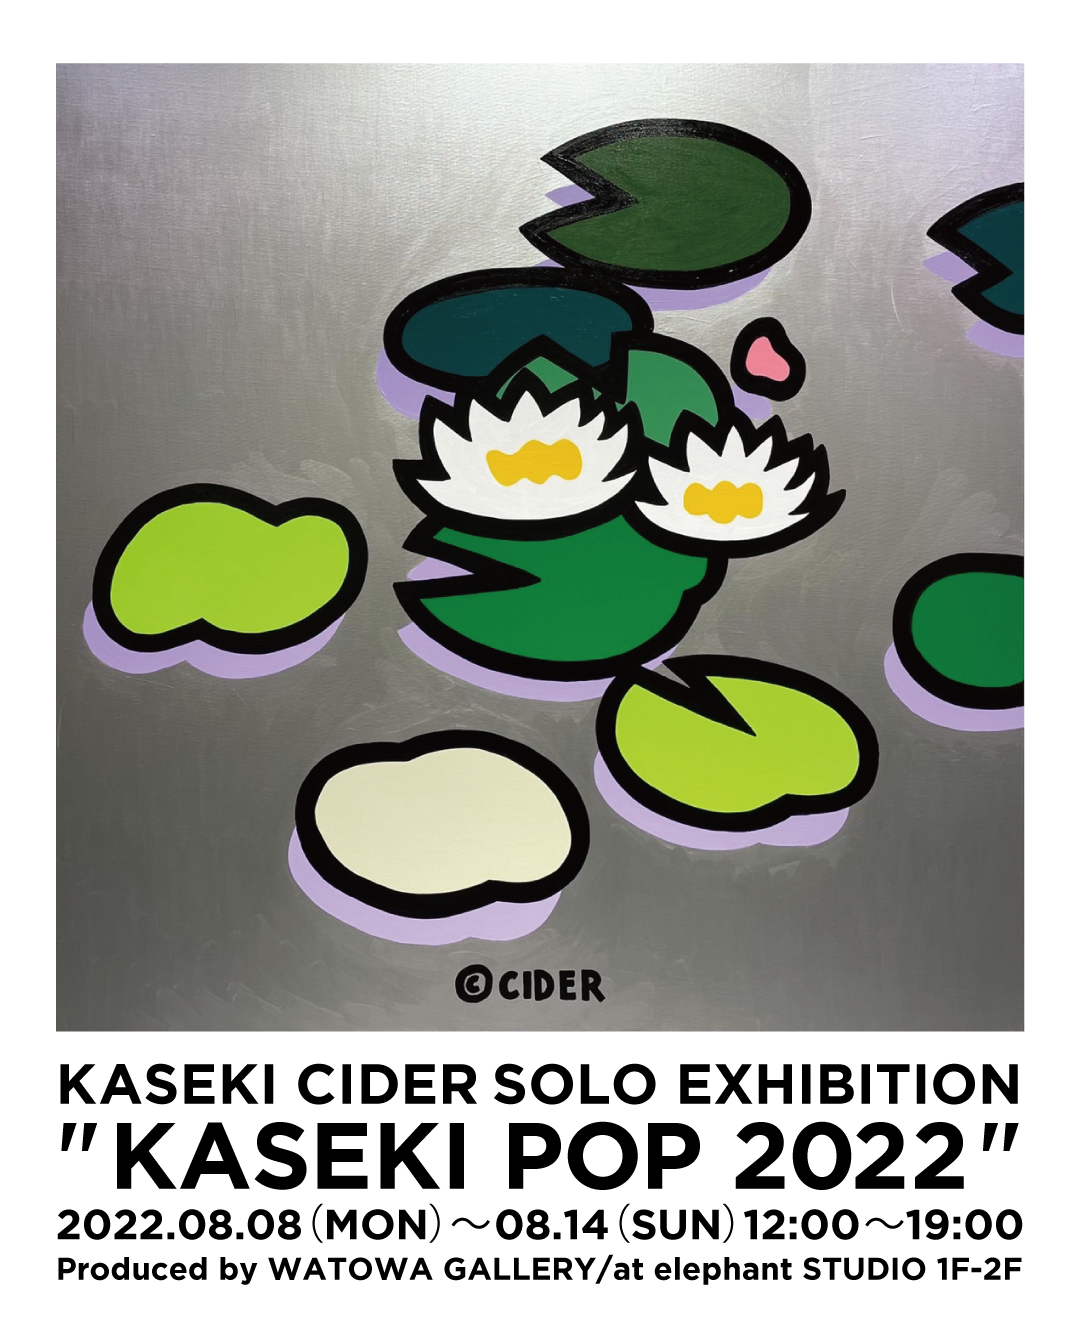 Kaseki Cider Solo Exhibition Kaseki Pop 22 のチケットを購入 Artsticker